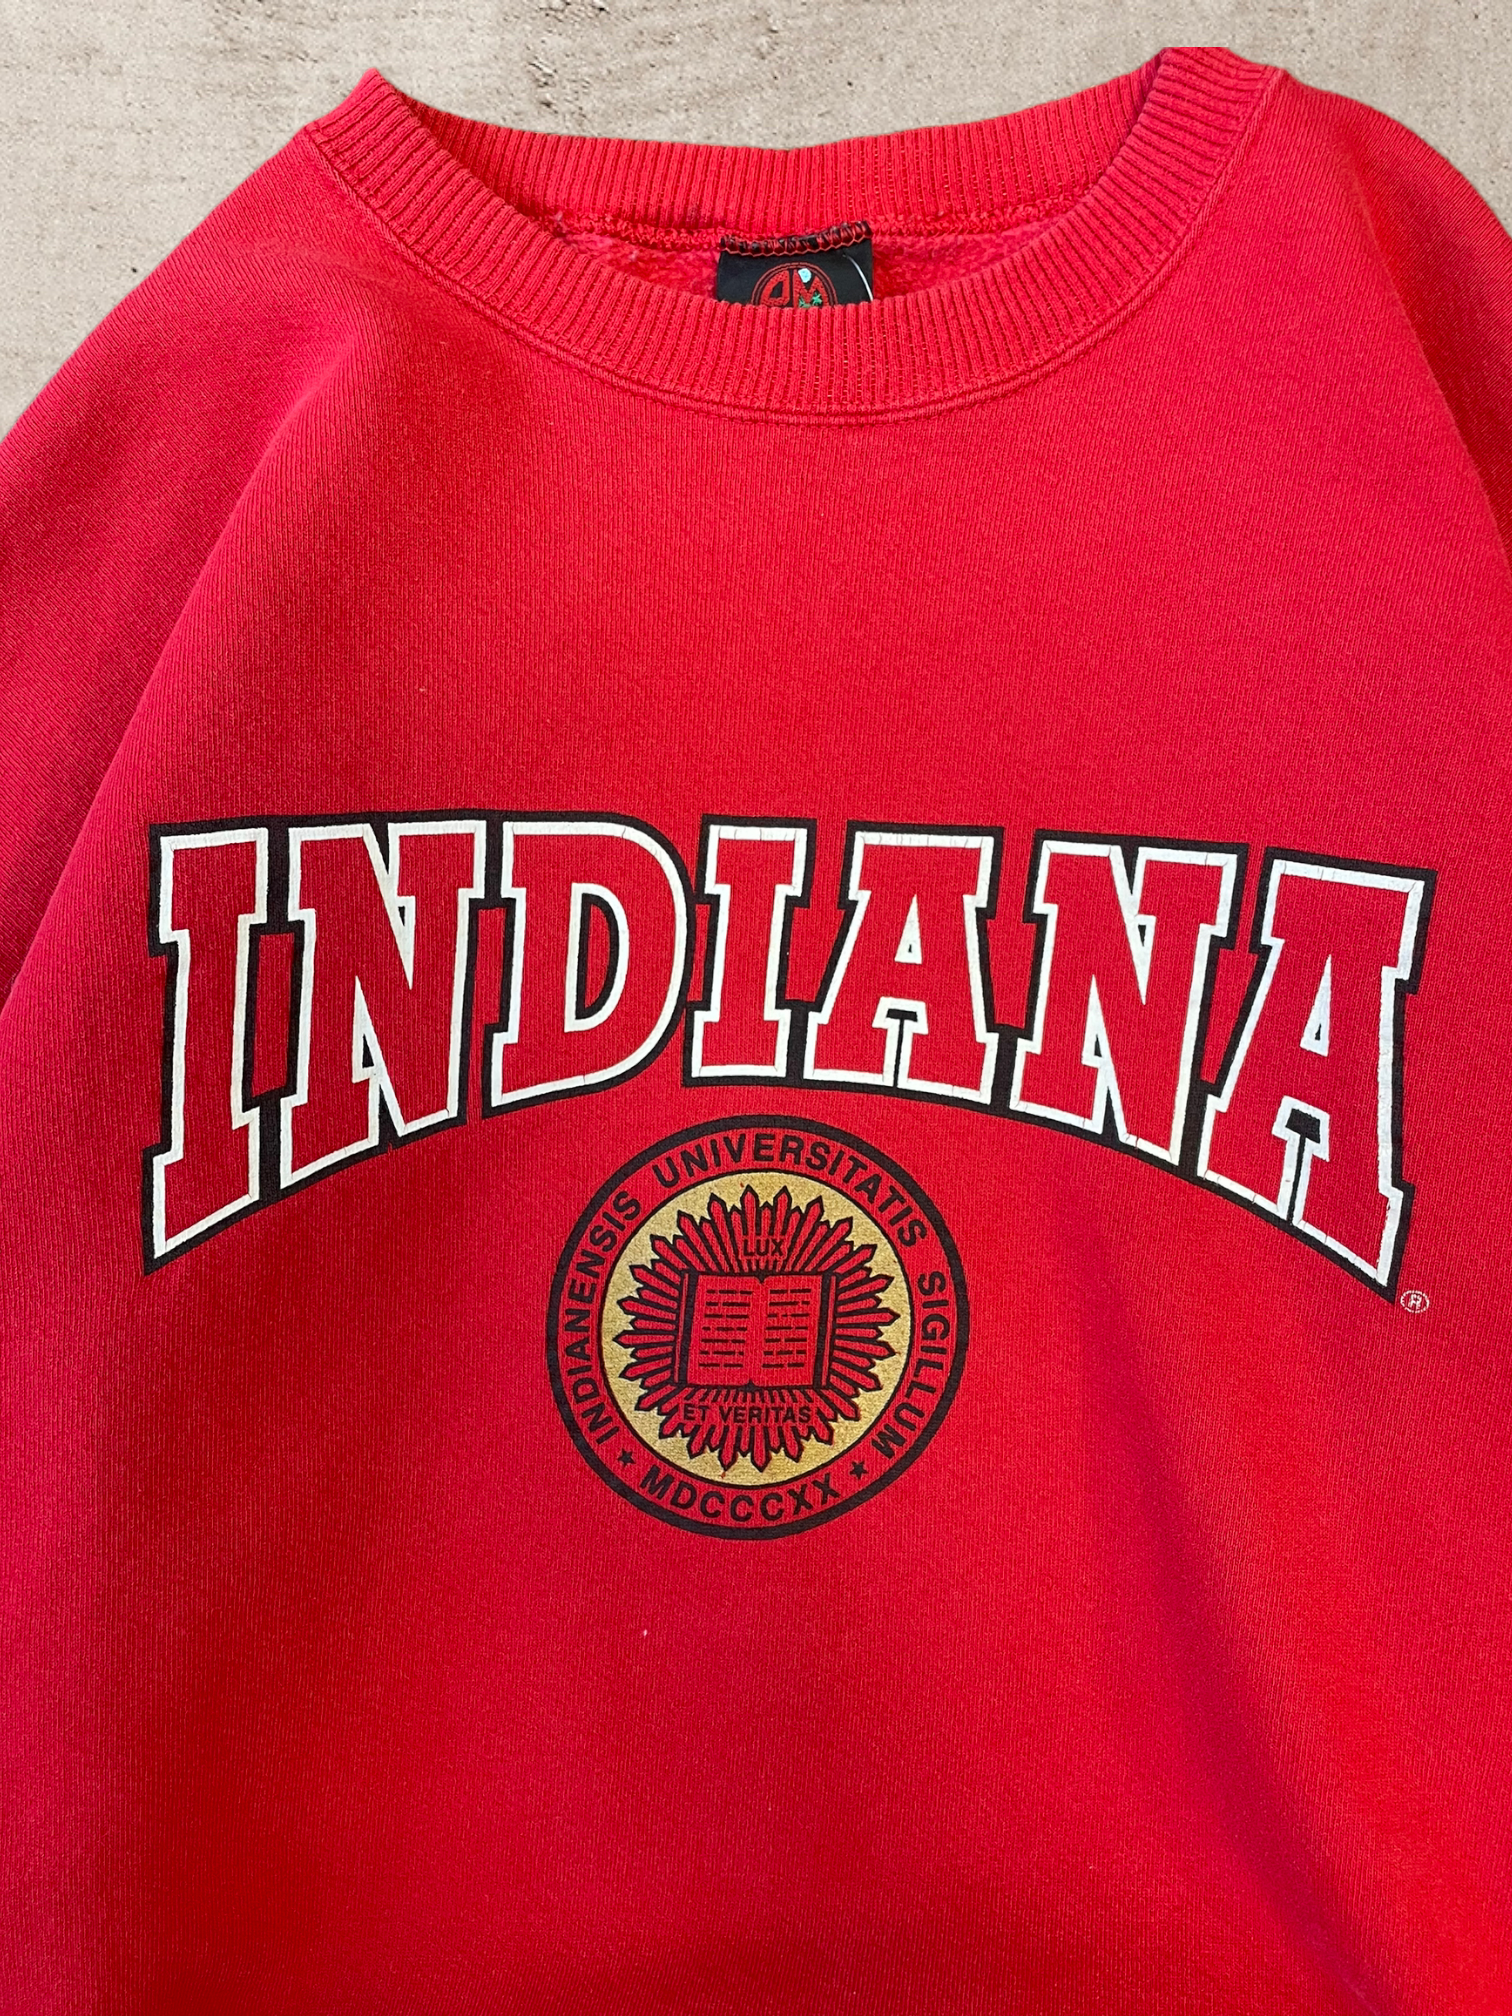 90s Indiana University Crewneck - XL